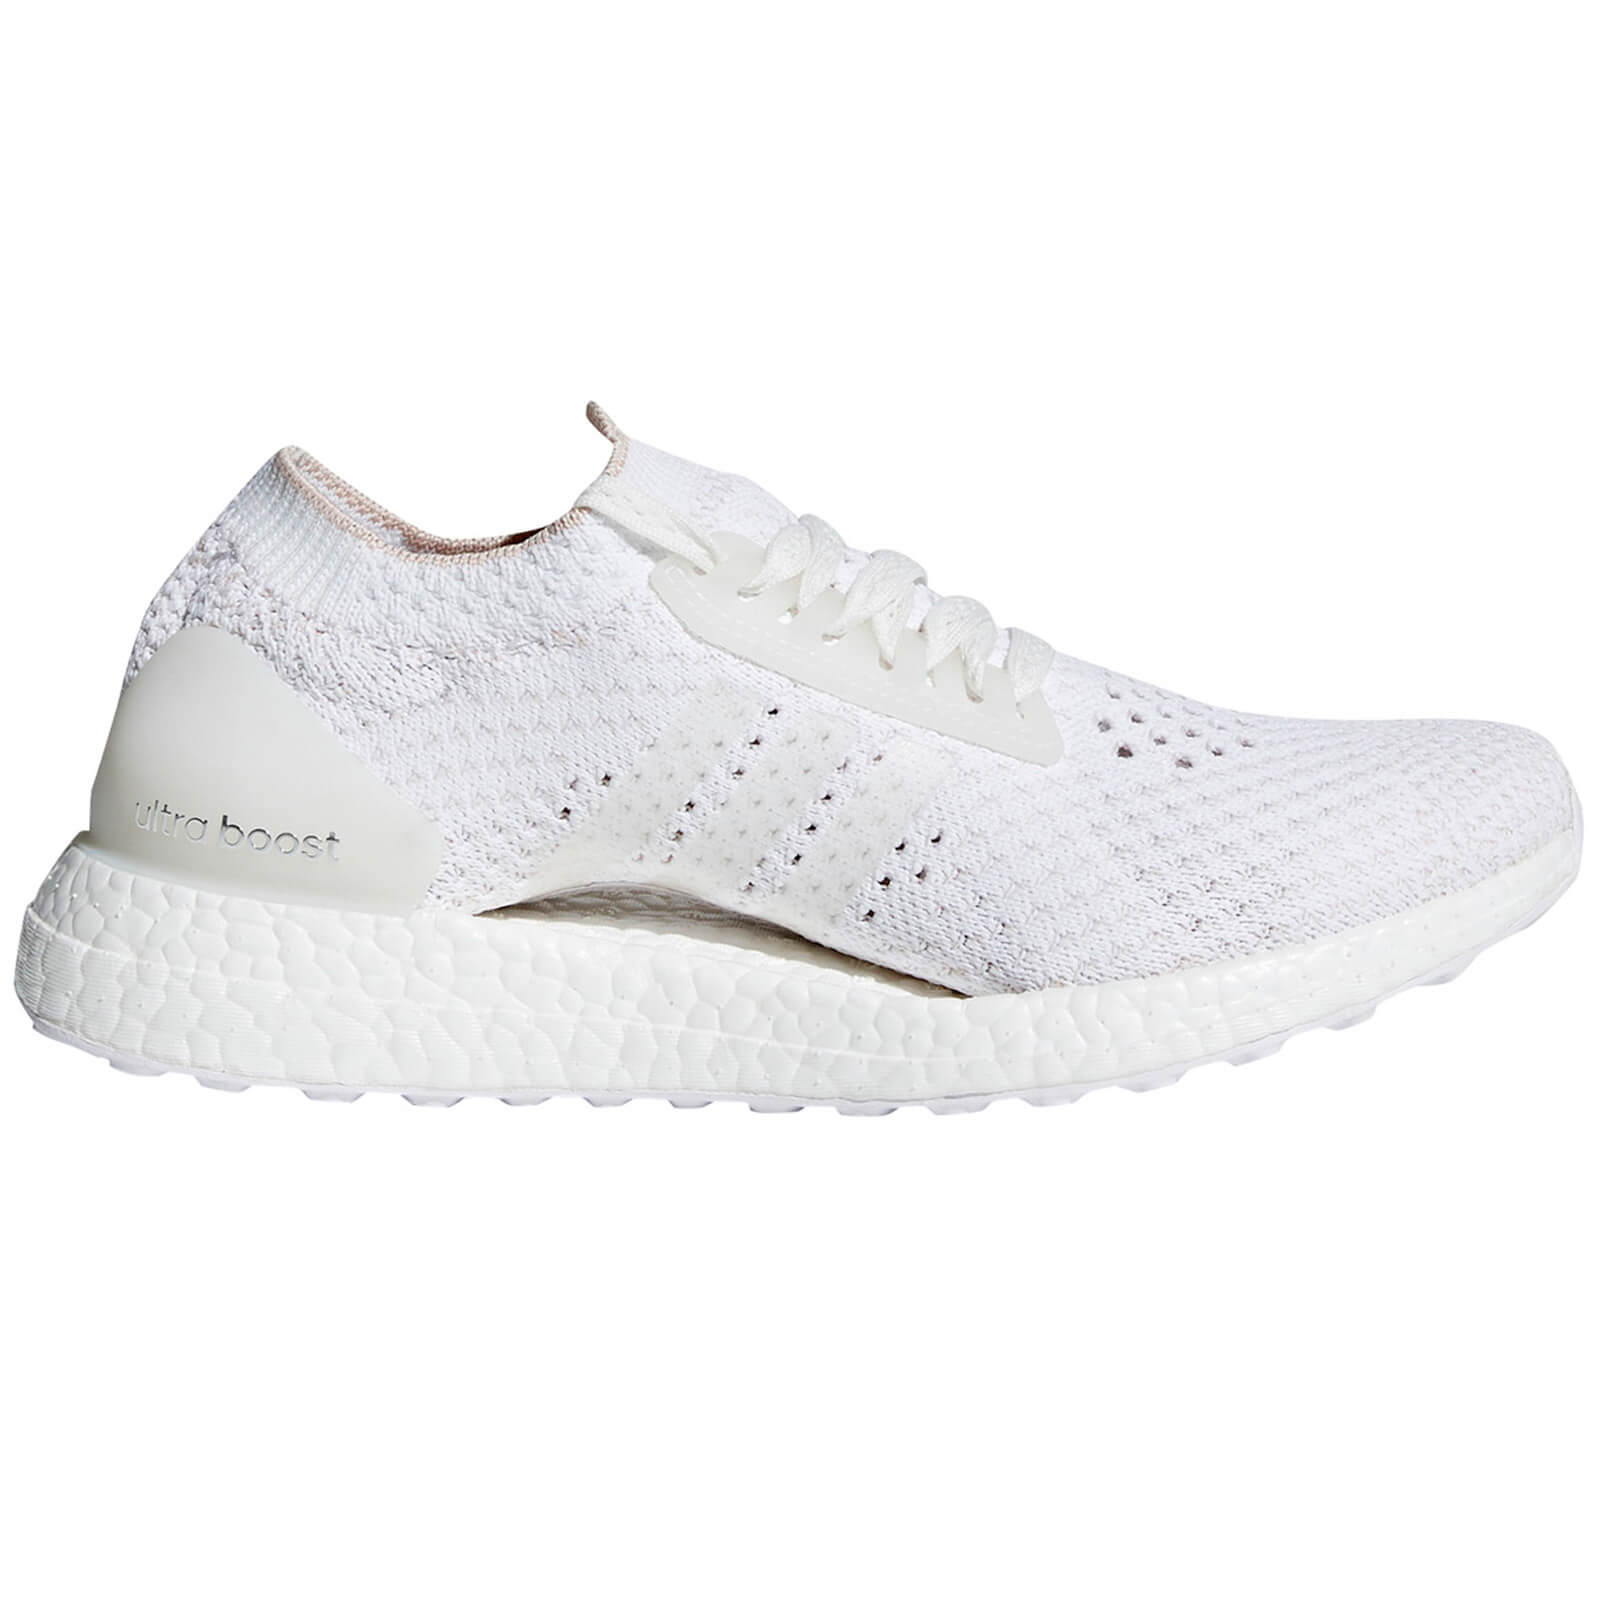 adidas women's ultraboost running shoes white